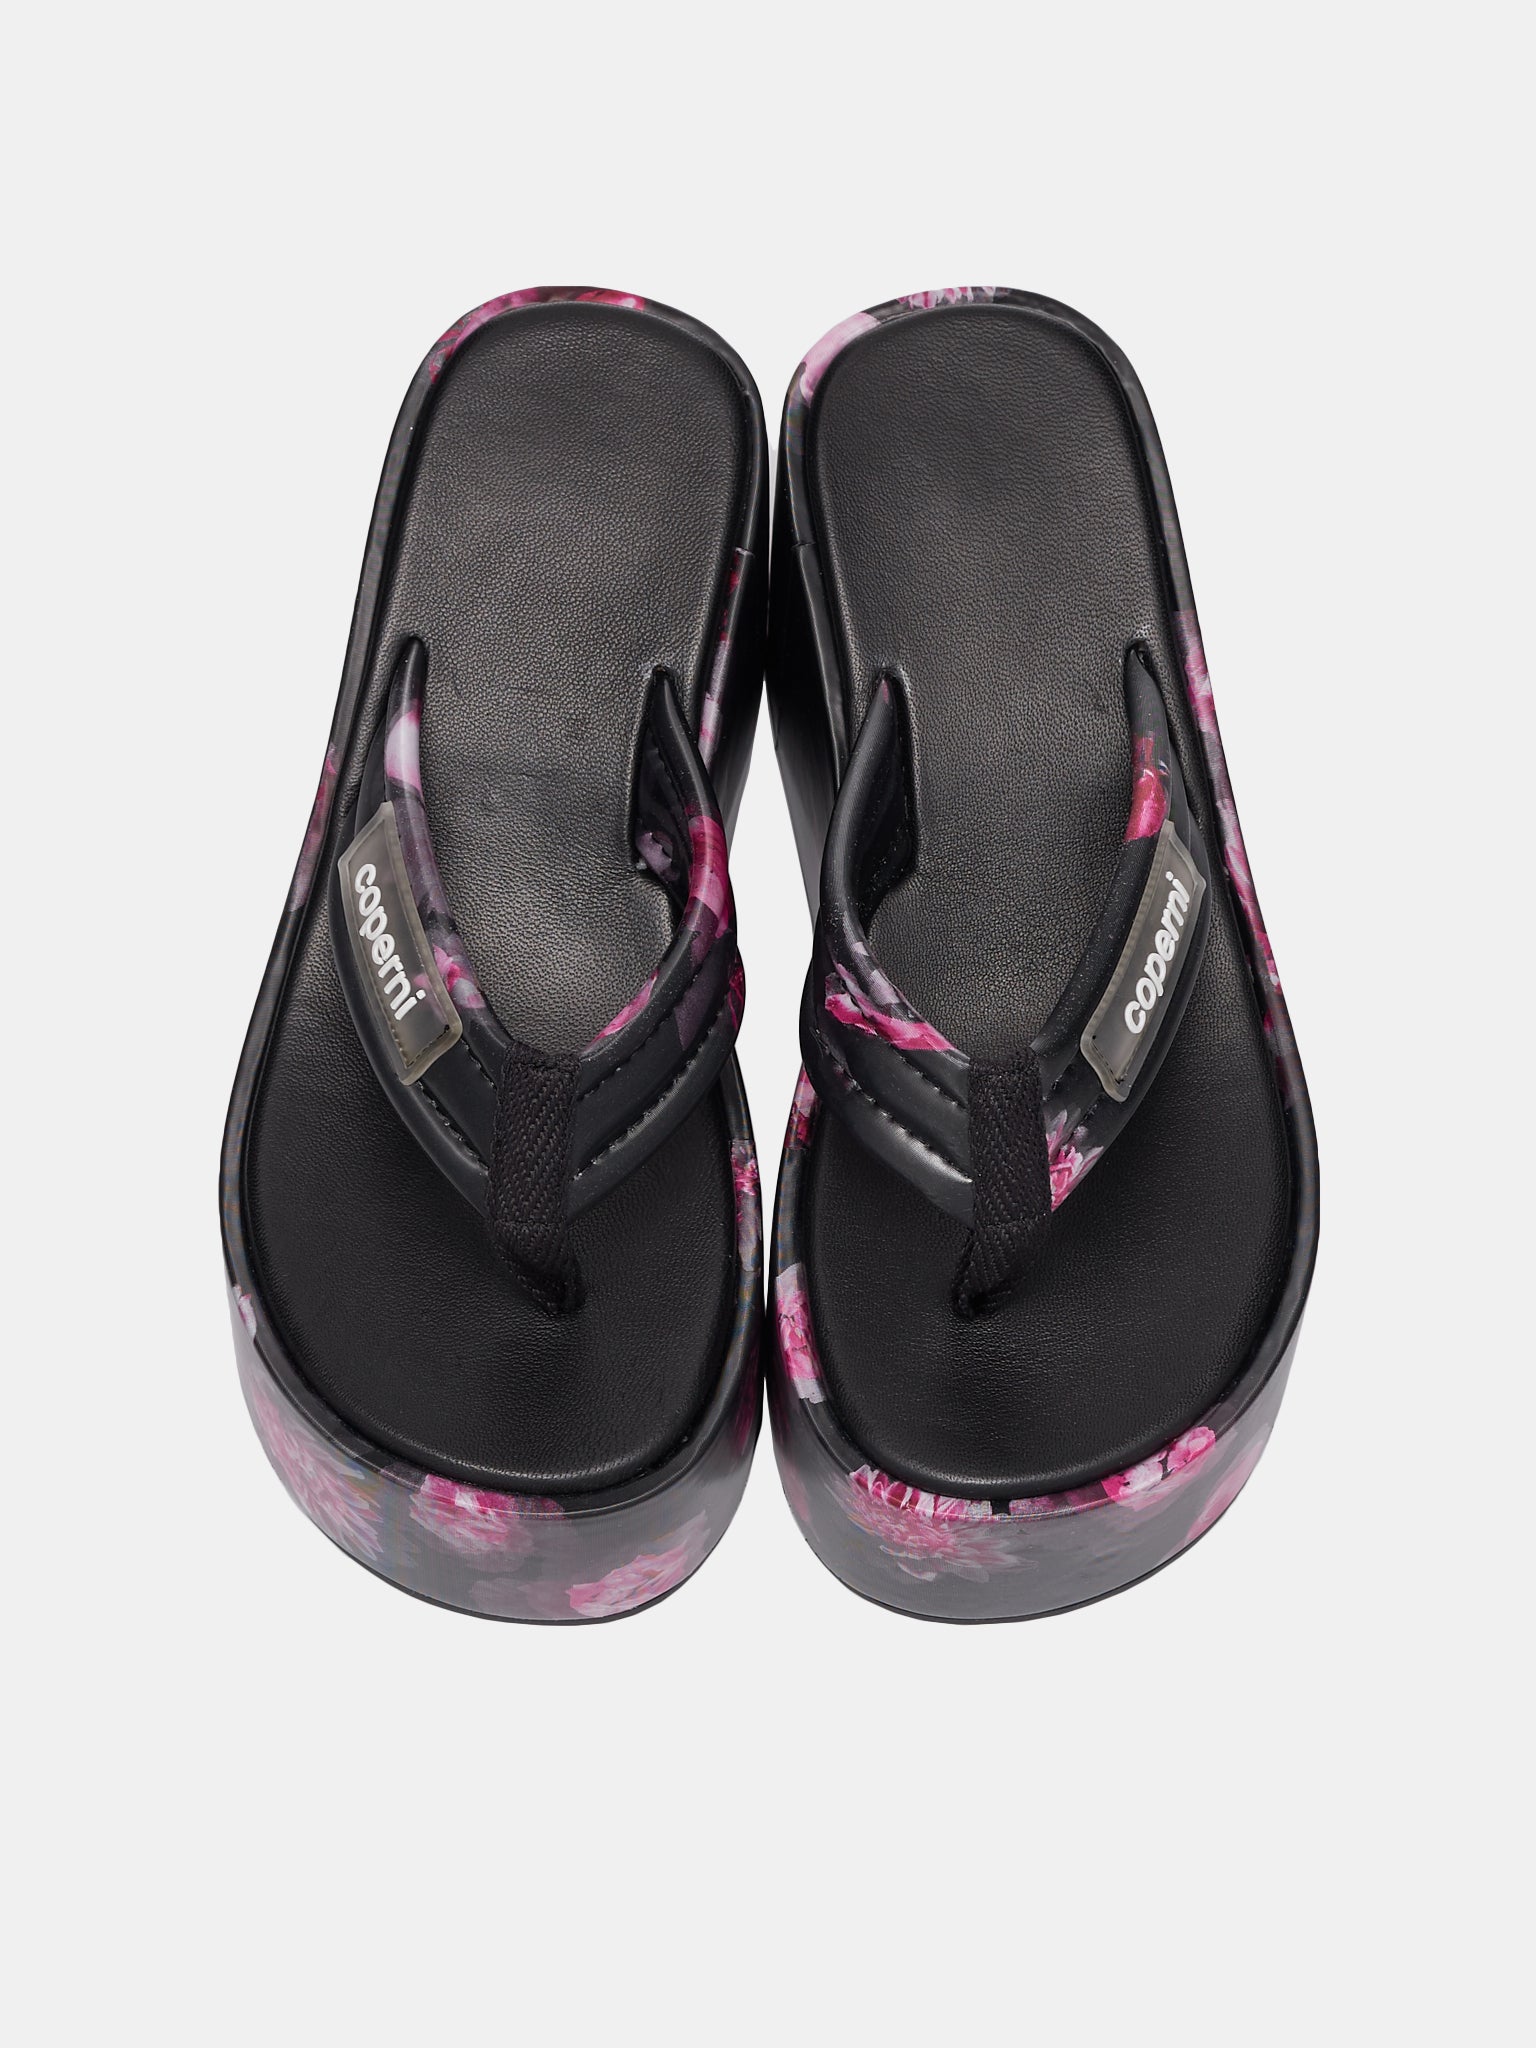 Holographic Wedge Sandals (COPSH09223-PINK-BLACK)